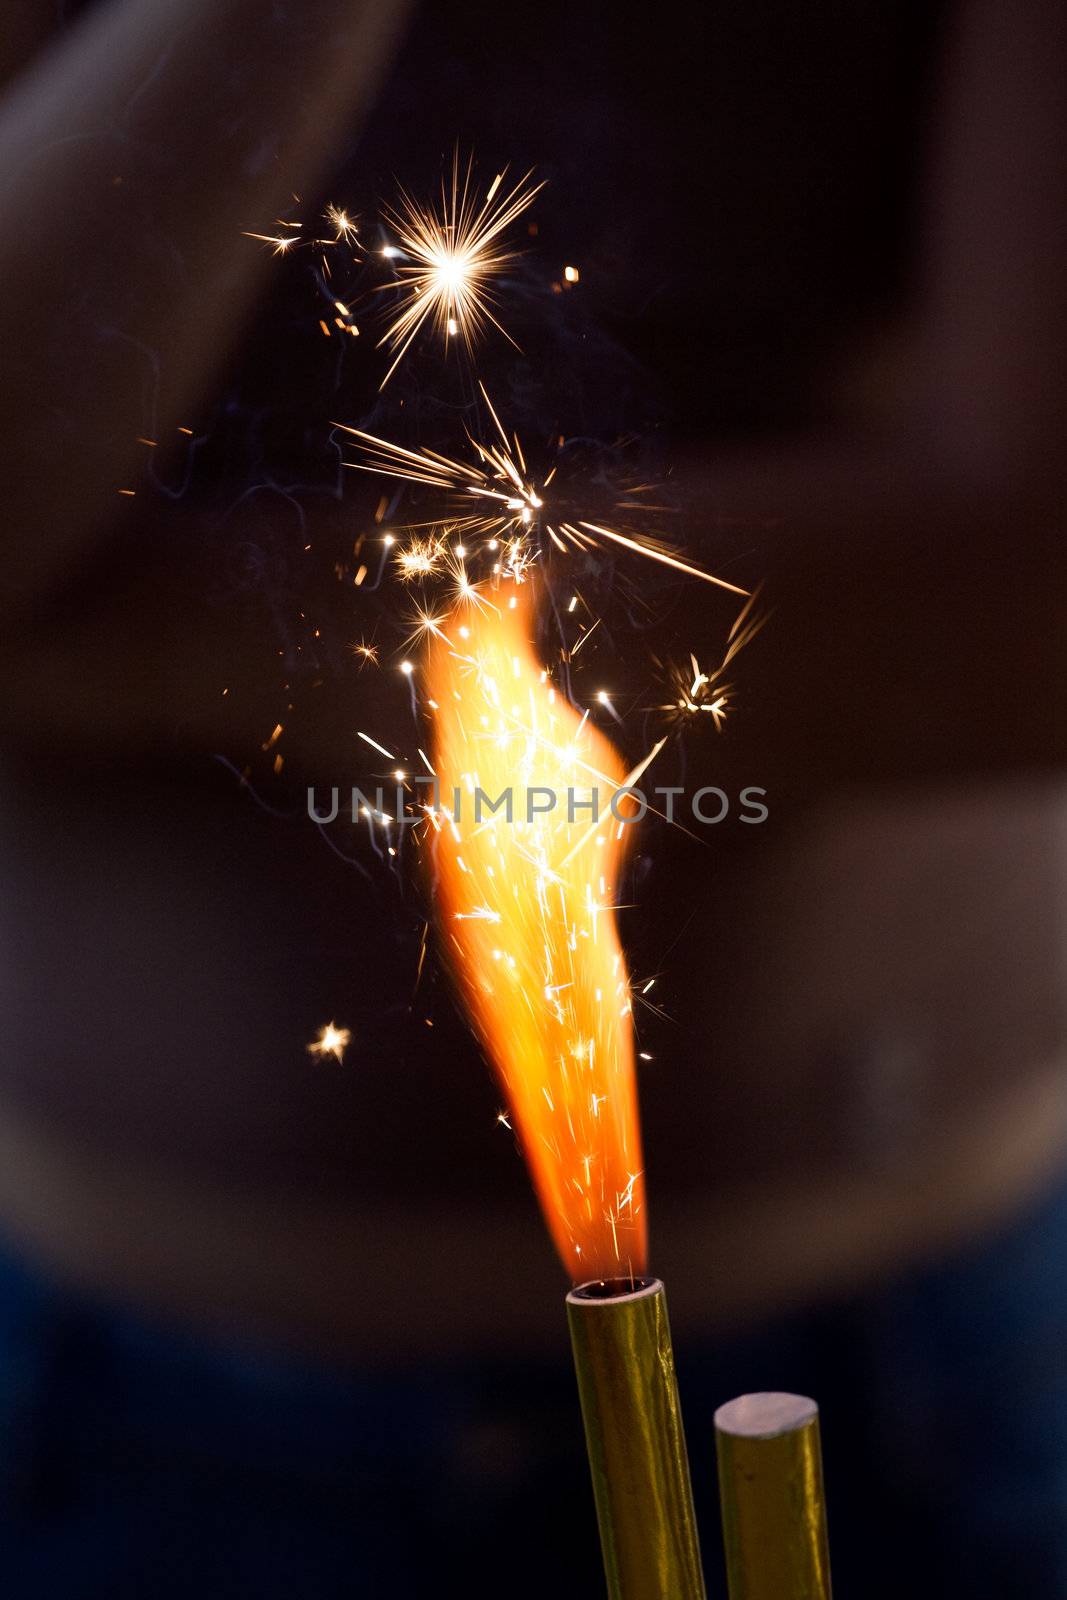 Burning birthday cake sparkler. Flame with branching white sparks.